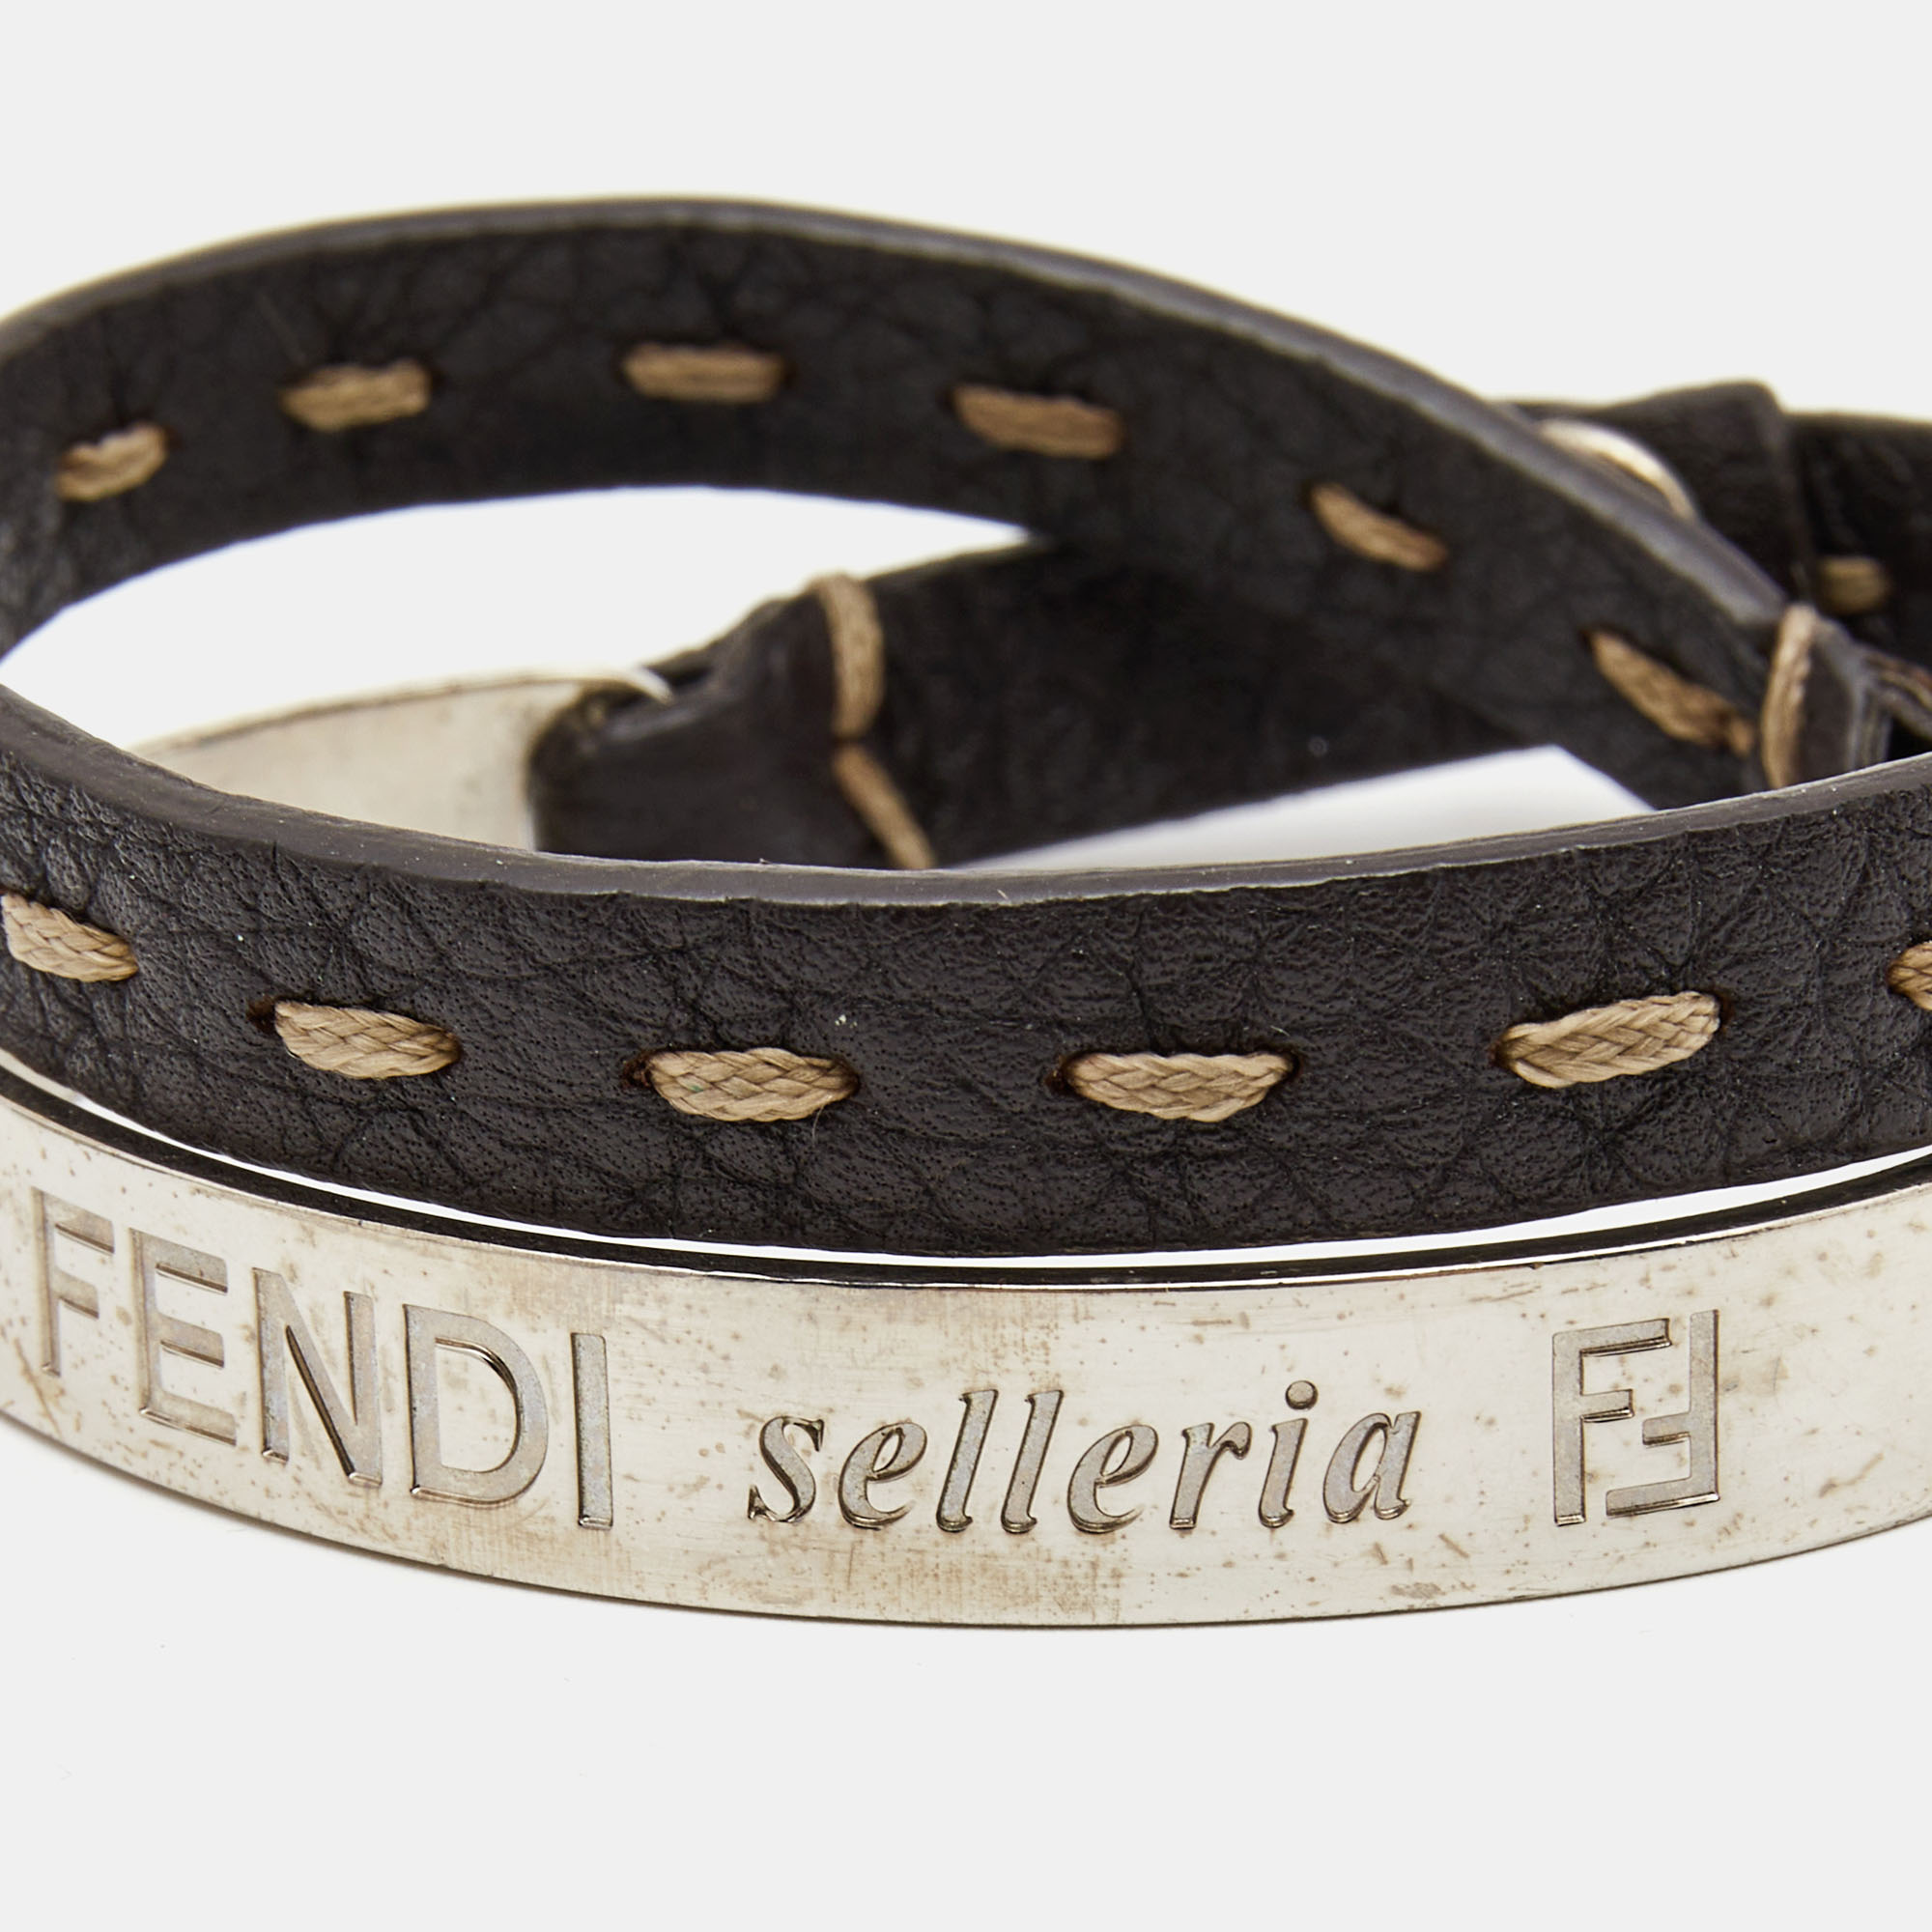 Fendi Selleria Silver Tone Cuff & Metallic Leather Double Wrap Bracelet